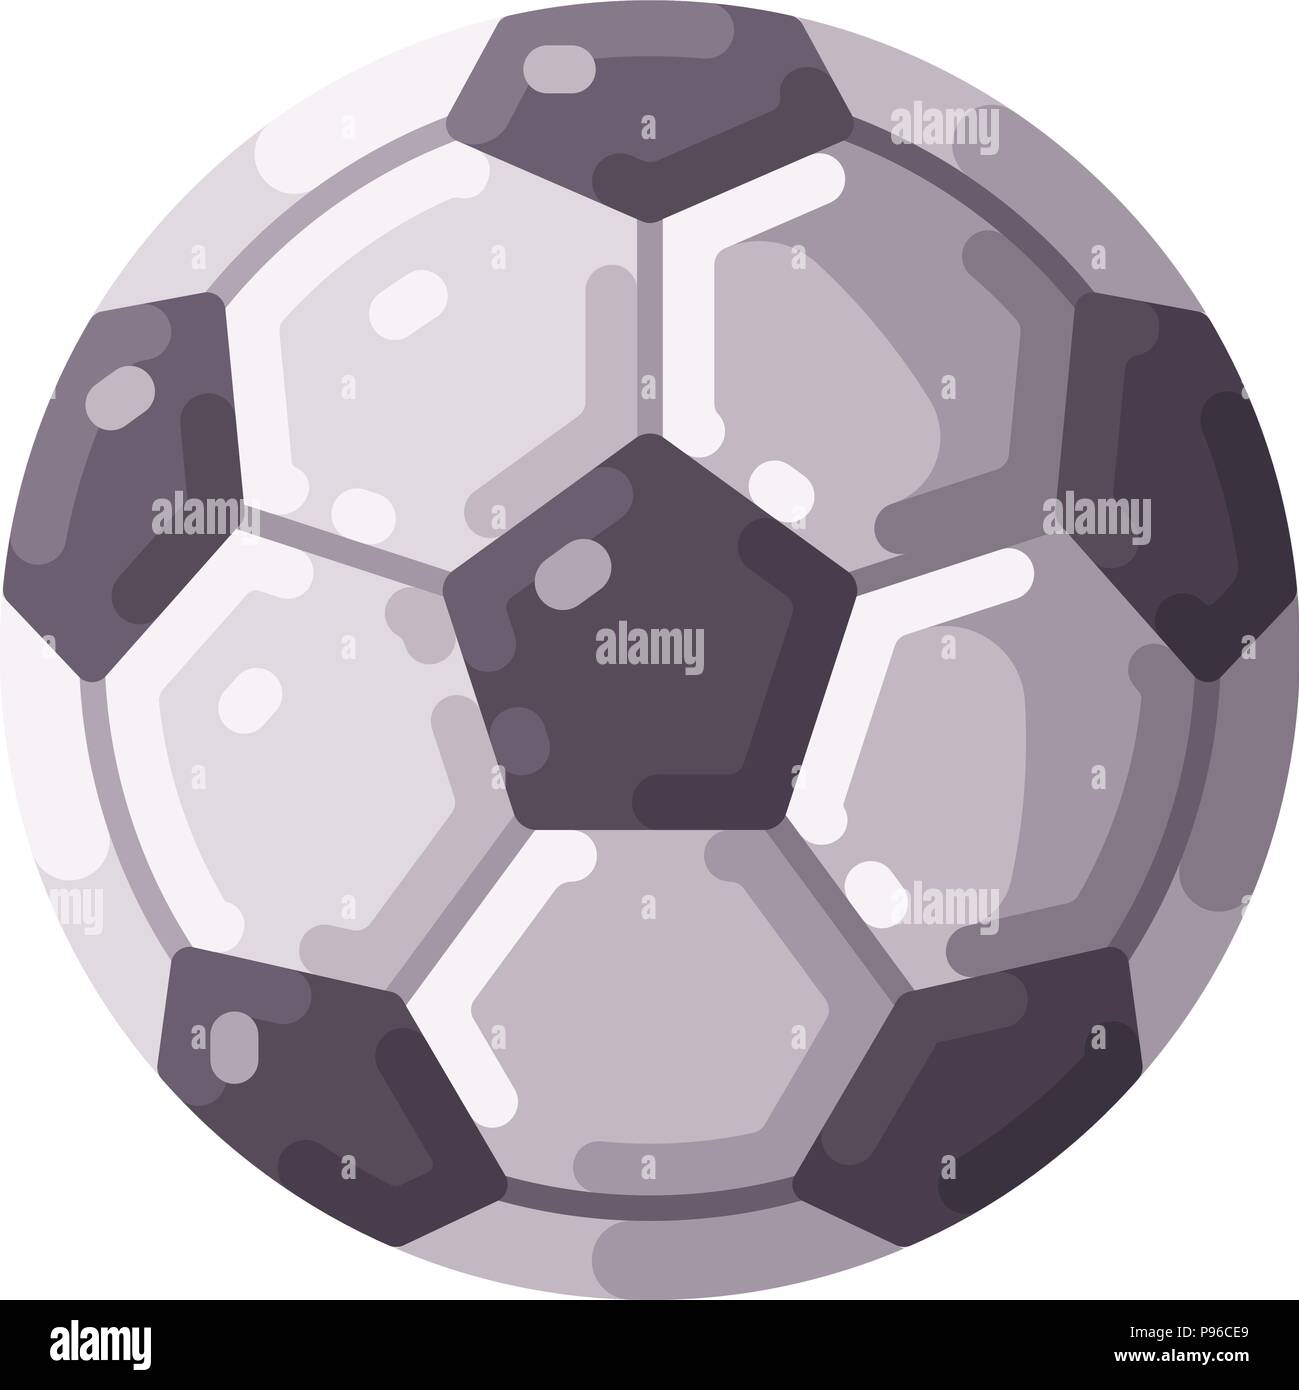 Fußball-Symbol. Fußball-Weltmeisterschaft flachbild Abbildung. Stock Vektor